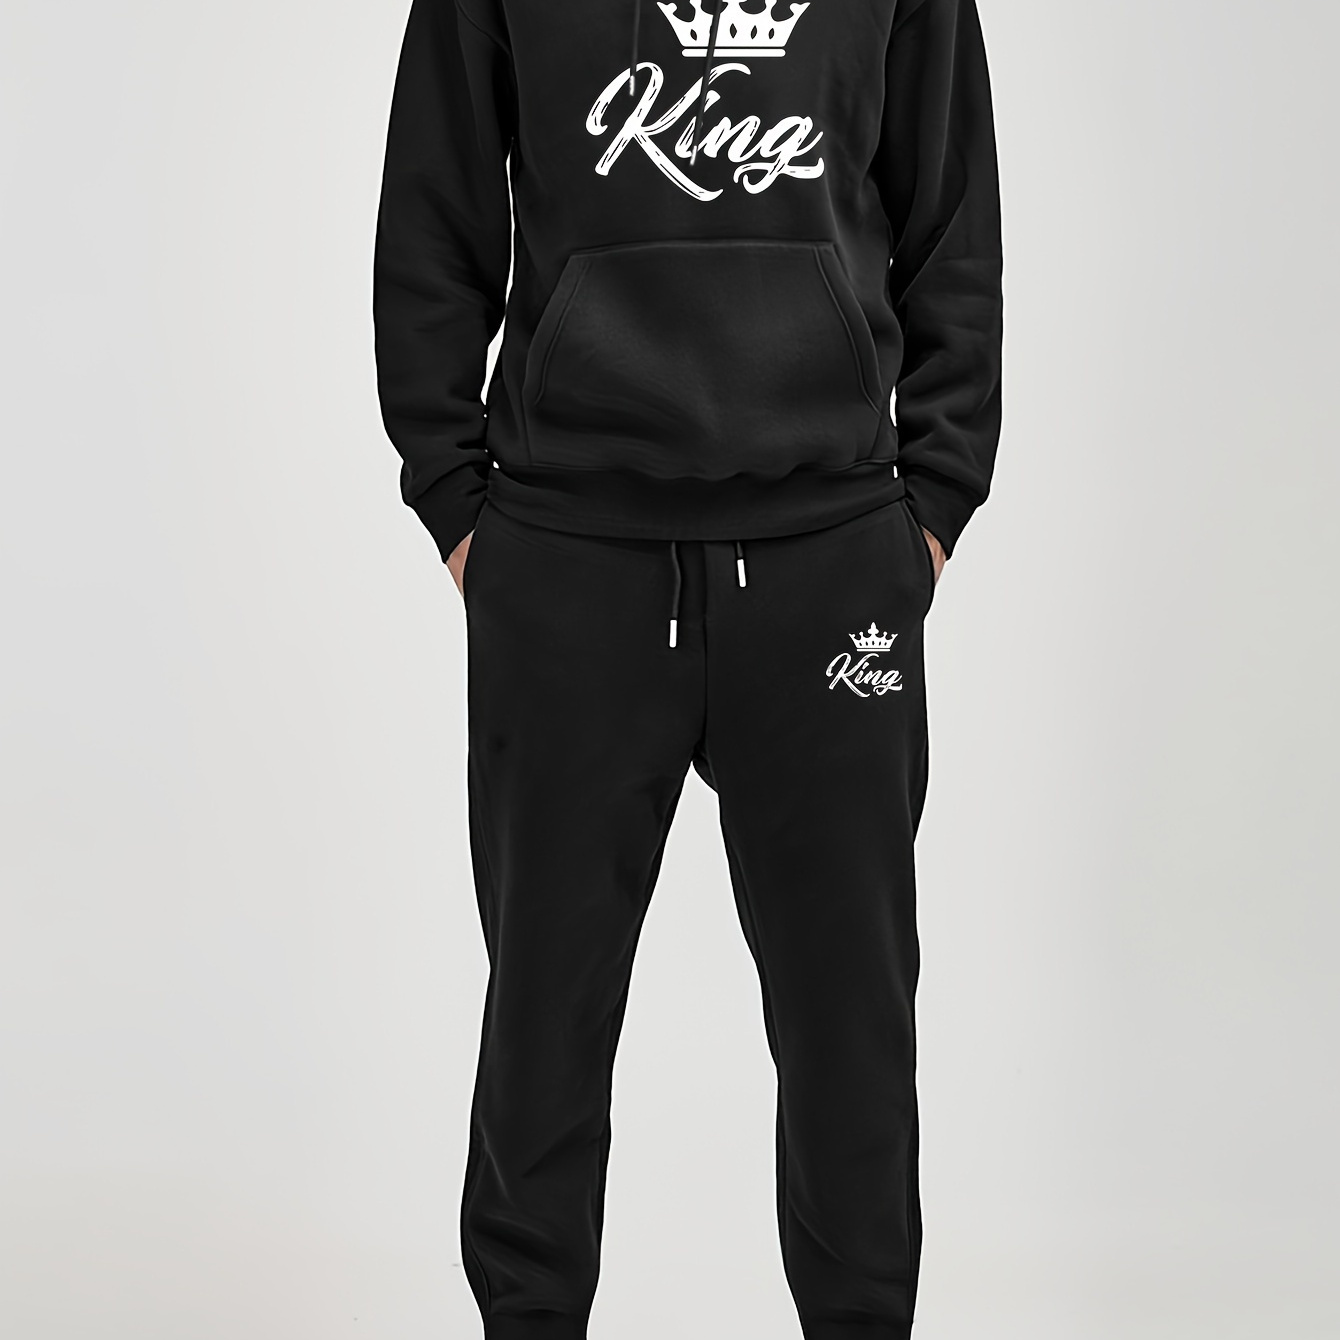 

Crown King Print Men's 2pcs Outfits Casual Crew Neck Long Sleeve Hooded Sweatshirt With Kangaroo Pocket & Drawstring Sweatpants Joggers Set For Winter Fall Men's Clothing